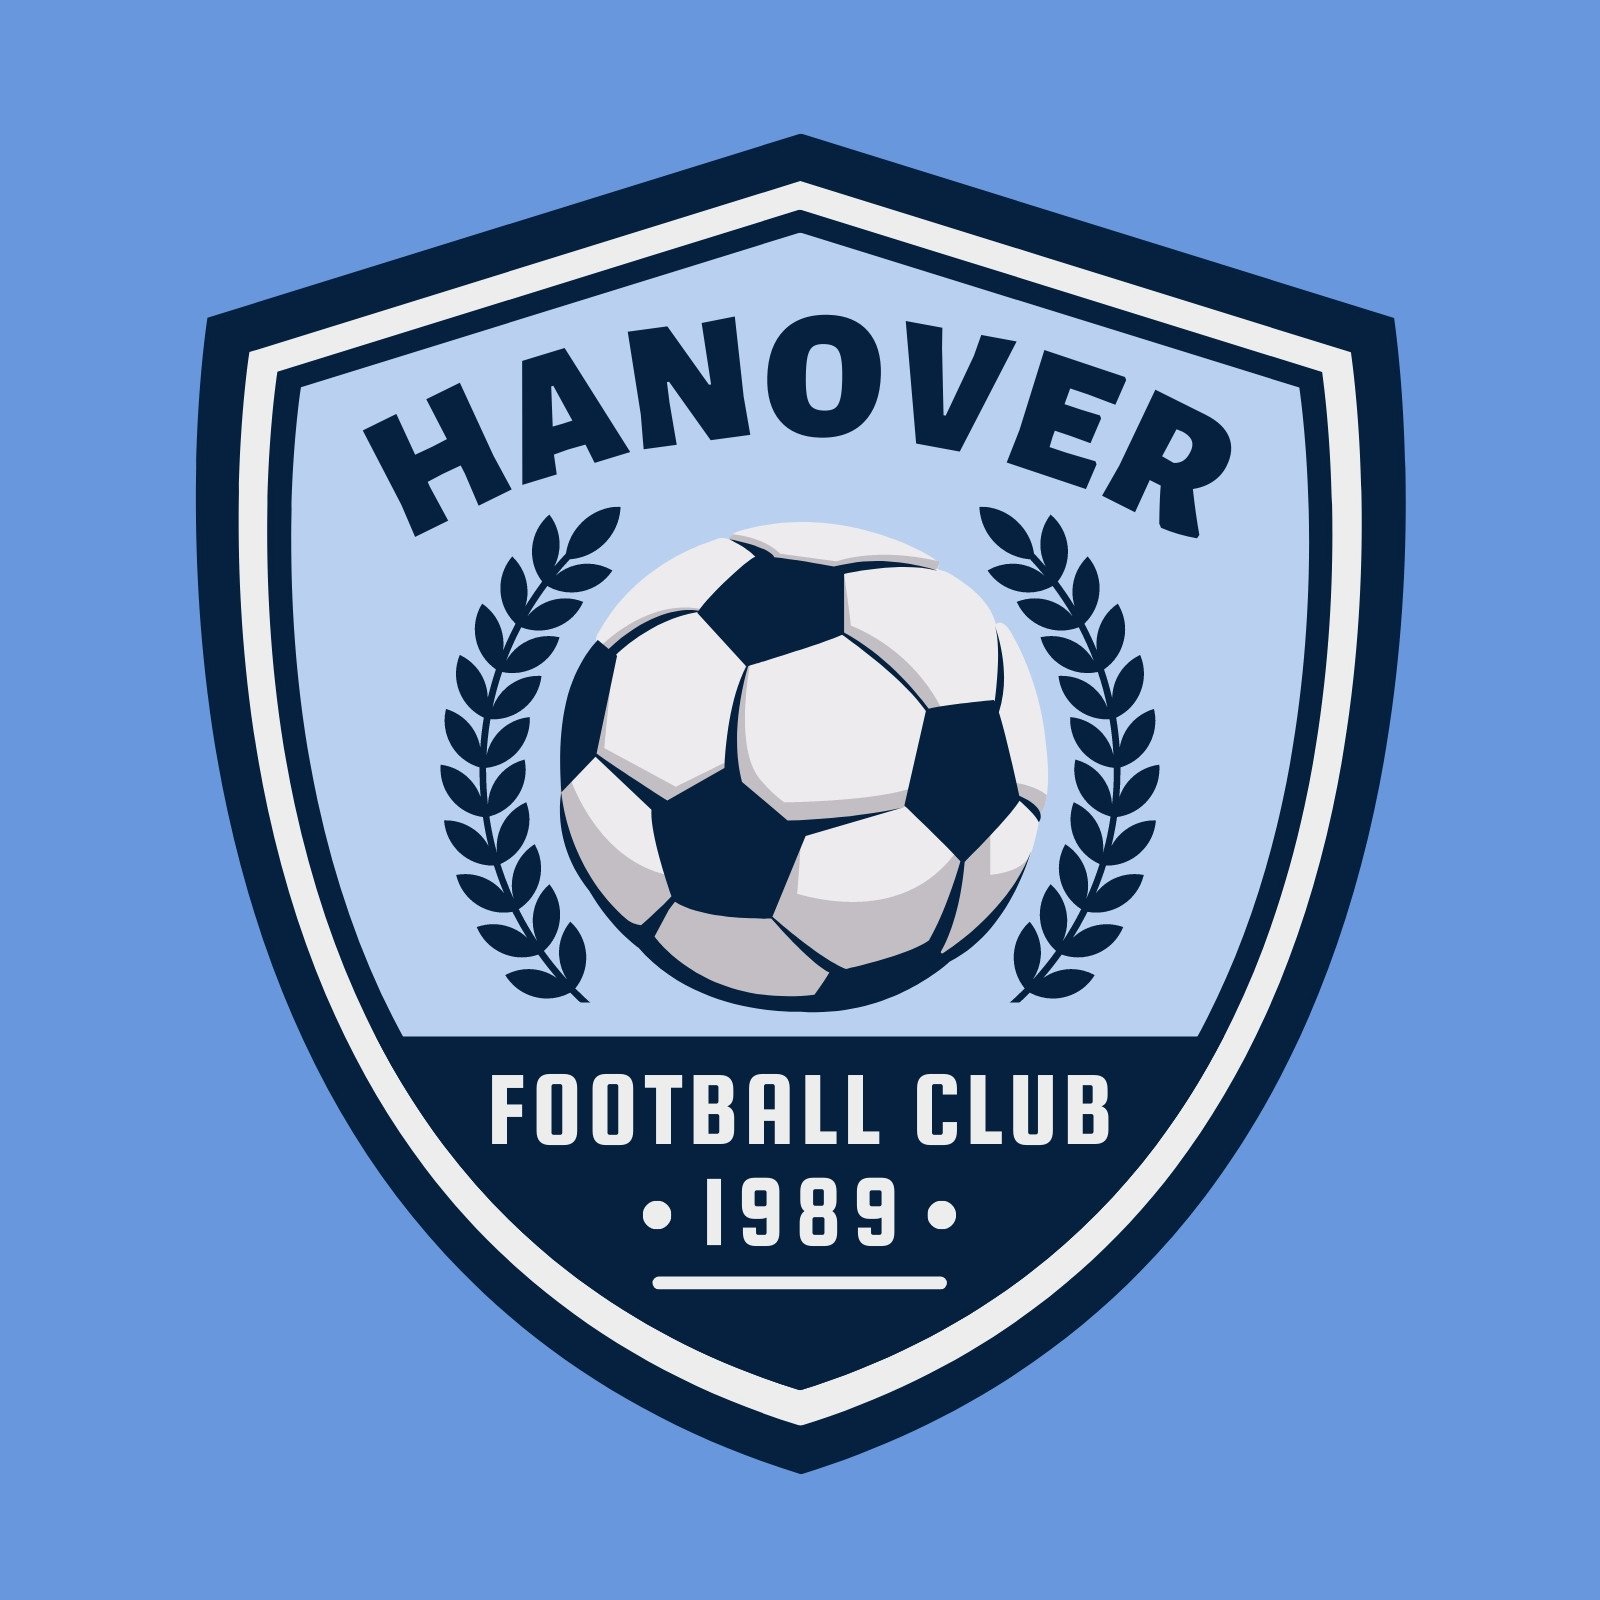 cool soccer logo designs